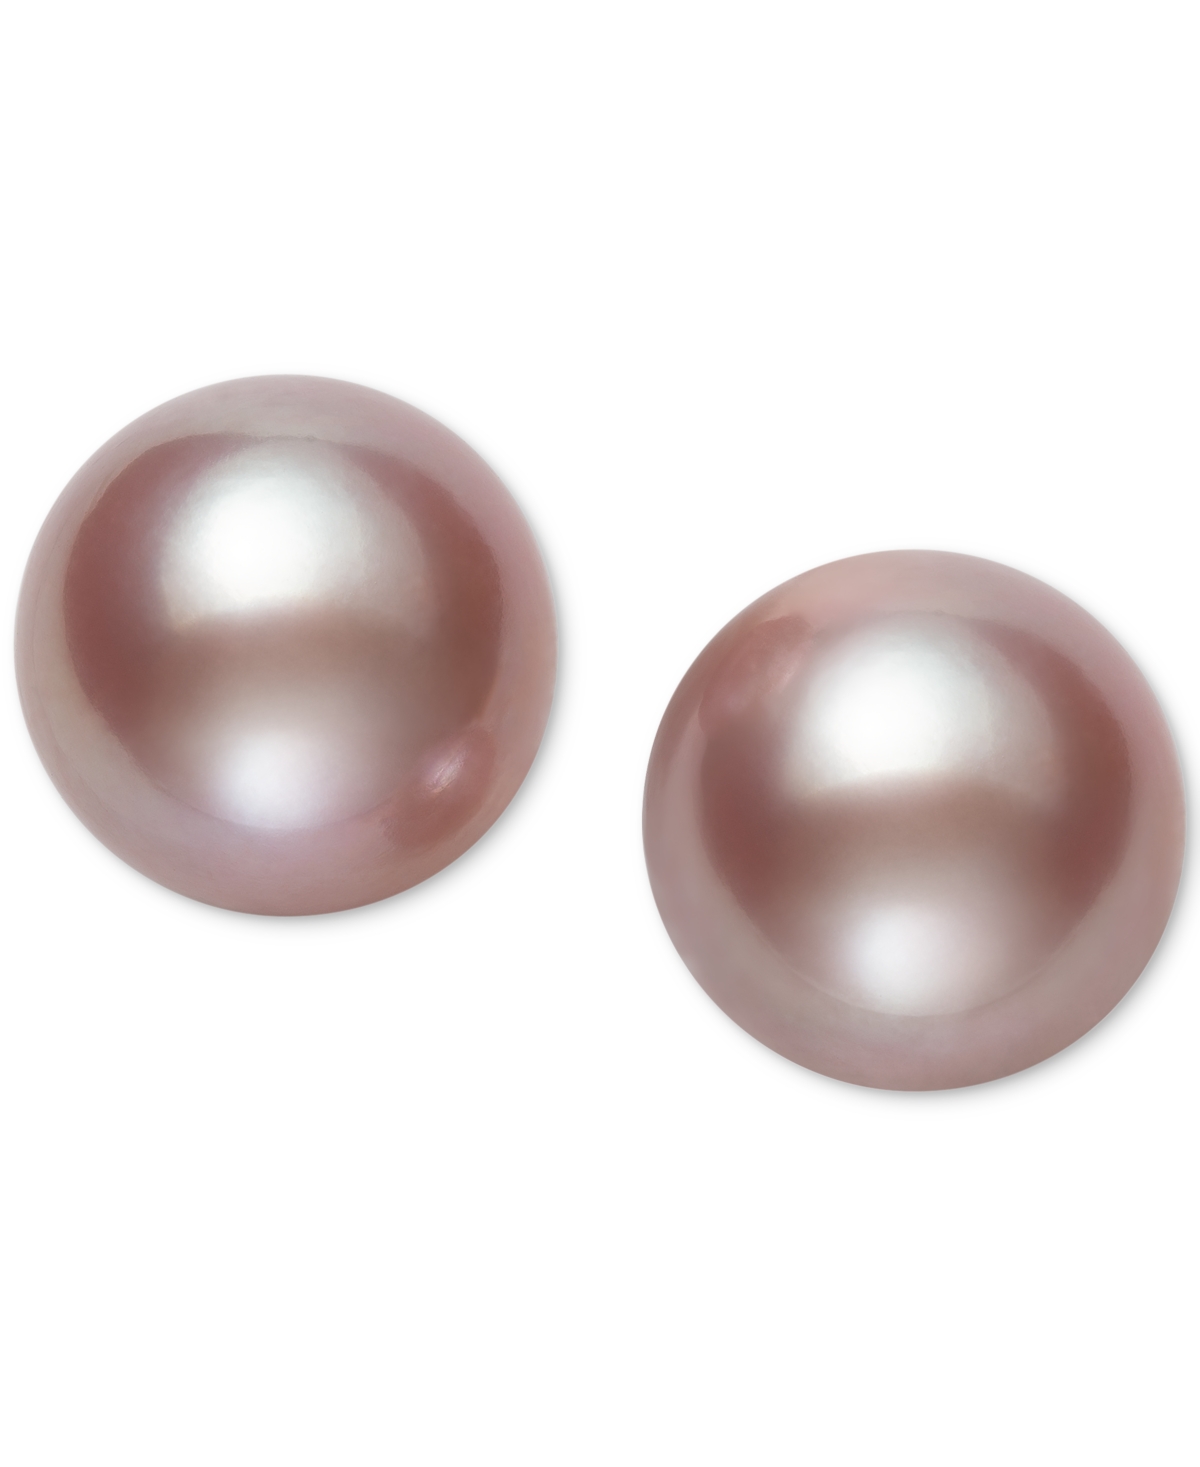 Belle de Mer Pearl Earrings, 14k Gold Cultured Freshwater Pearl Stud Earrings (10mm) (Also Available in Pink Cultured Freshwater Pearl)